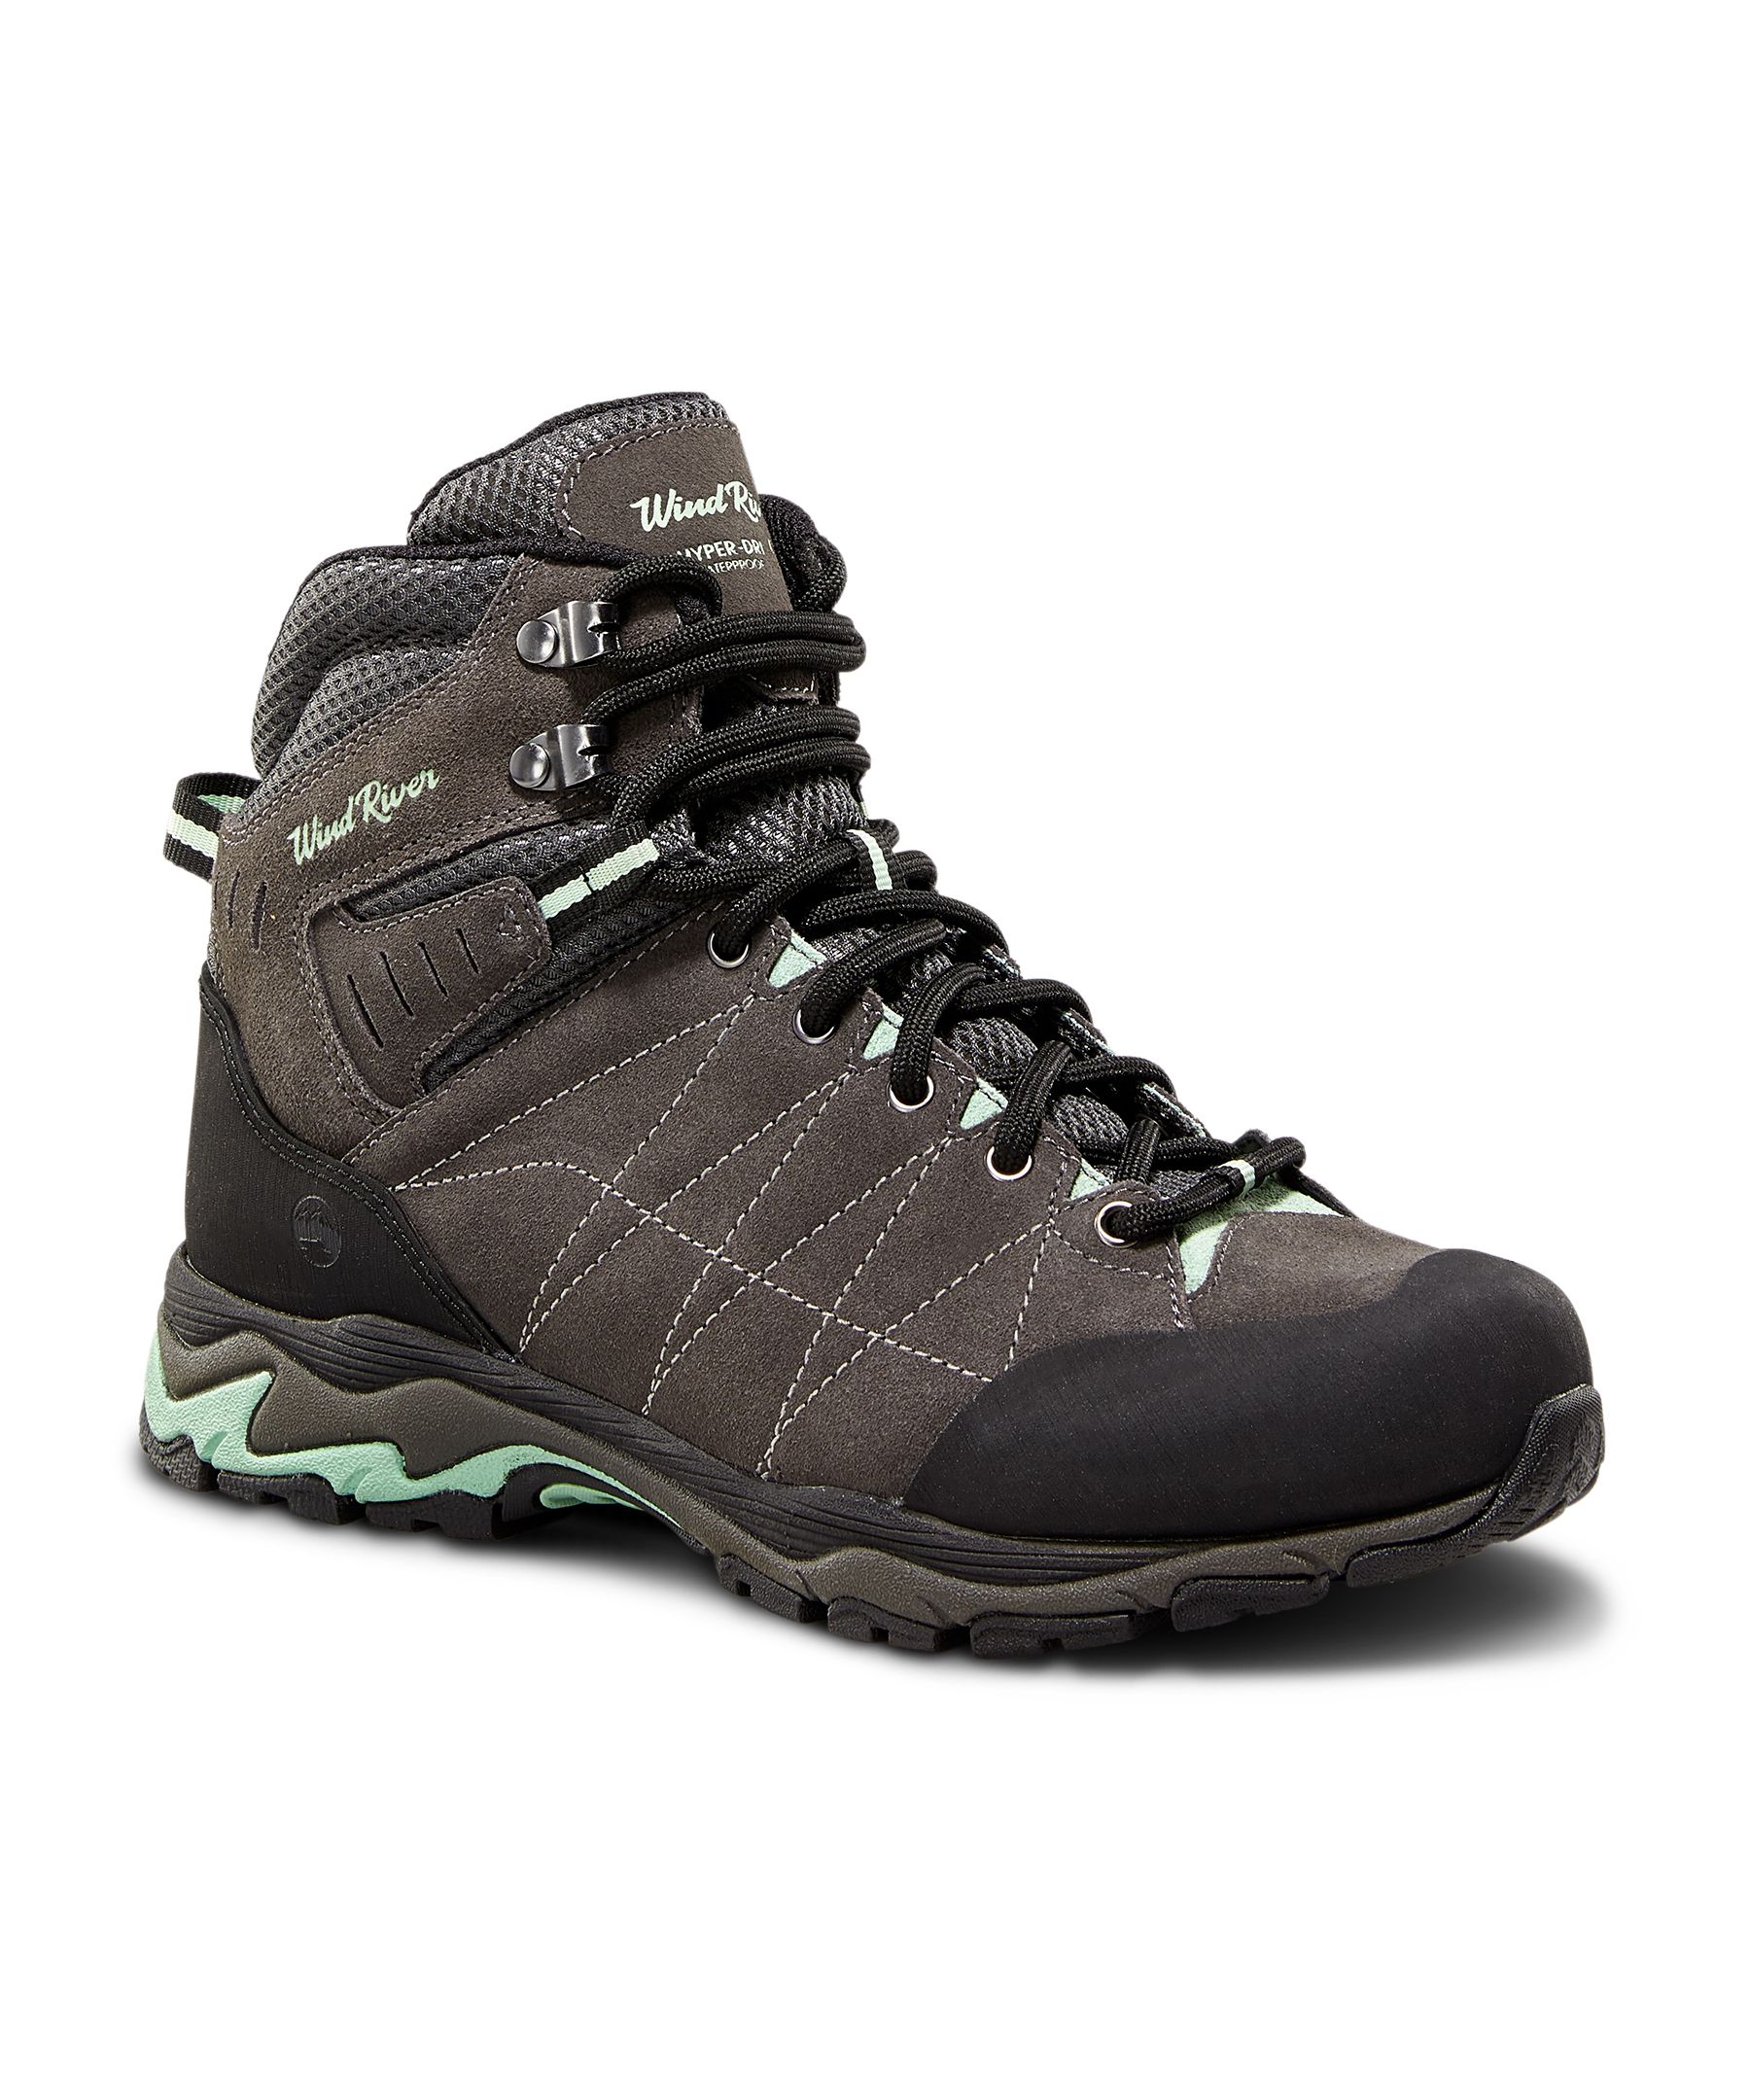 WindRiver Women's Scrambler Waterproof Hyper-Dri 3 Hiking Boots | Marks